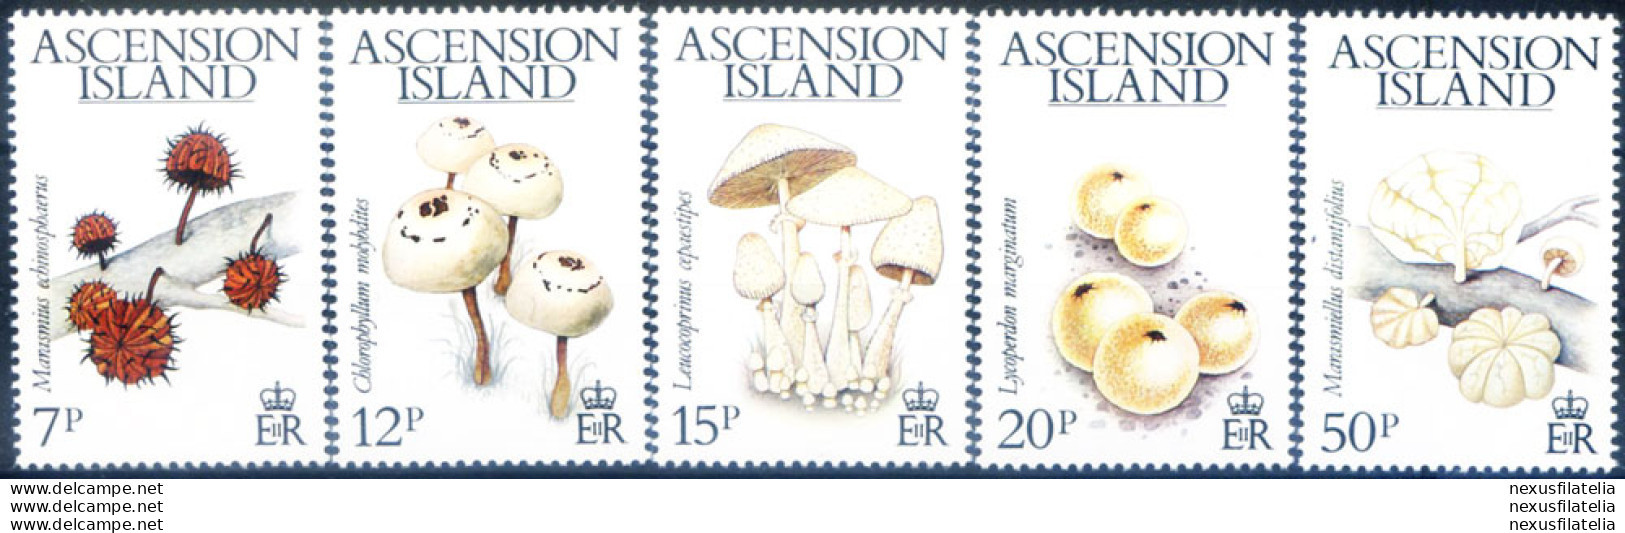 Funghi 1983. - Ascension